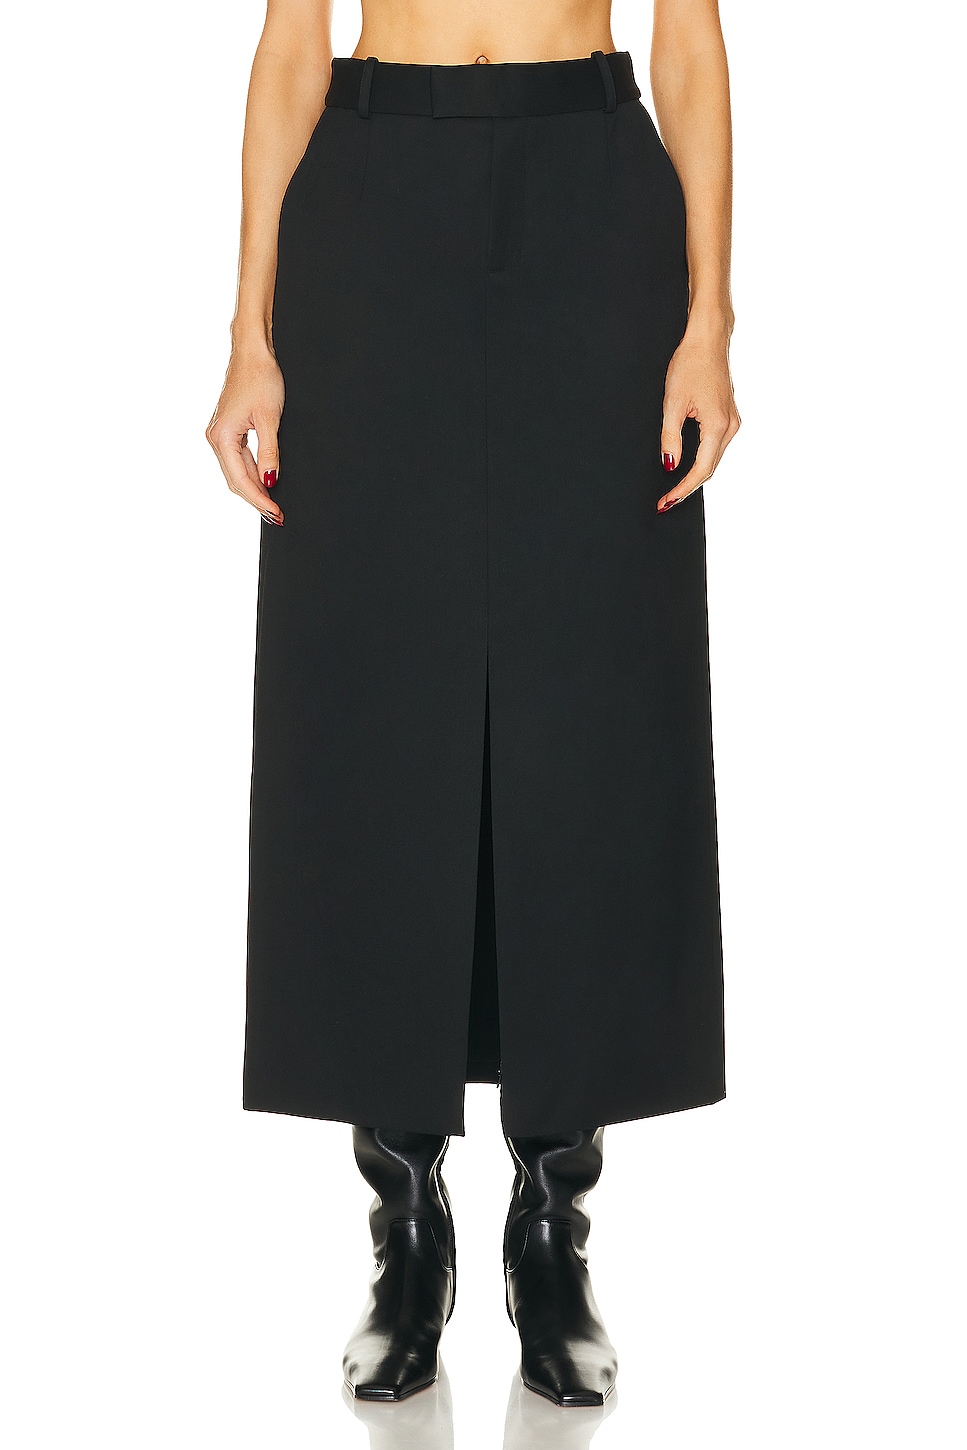 Jalda Straight Skirt in Black